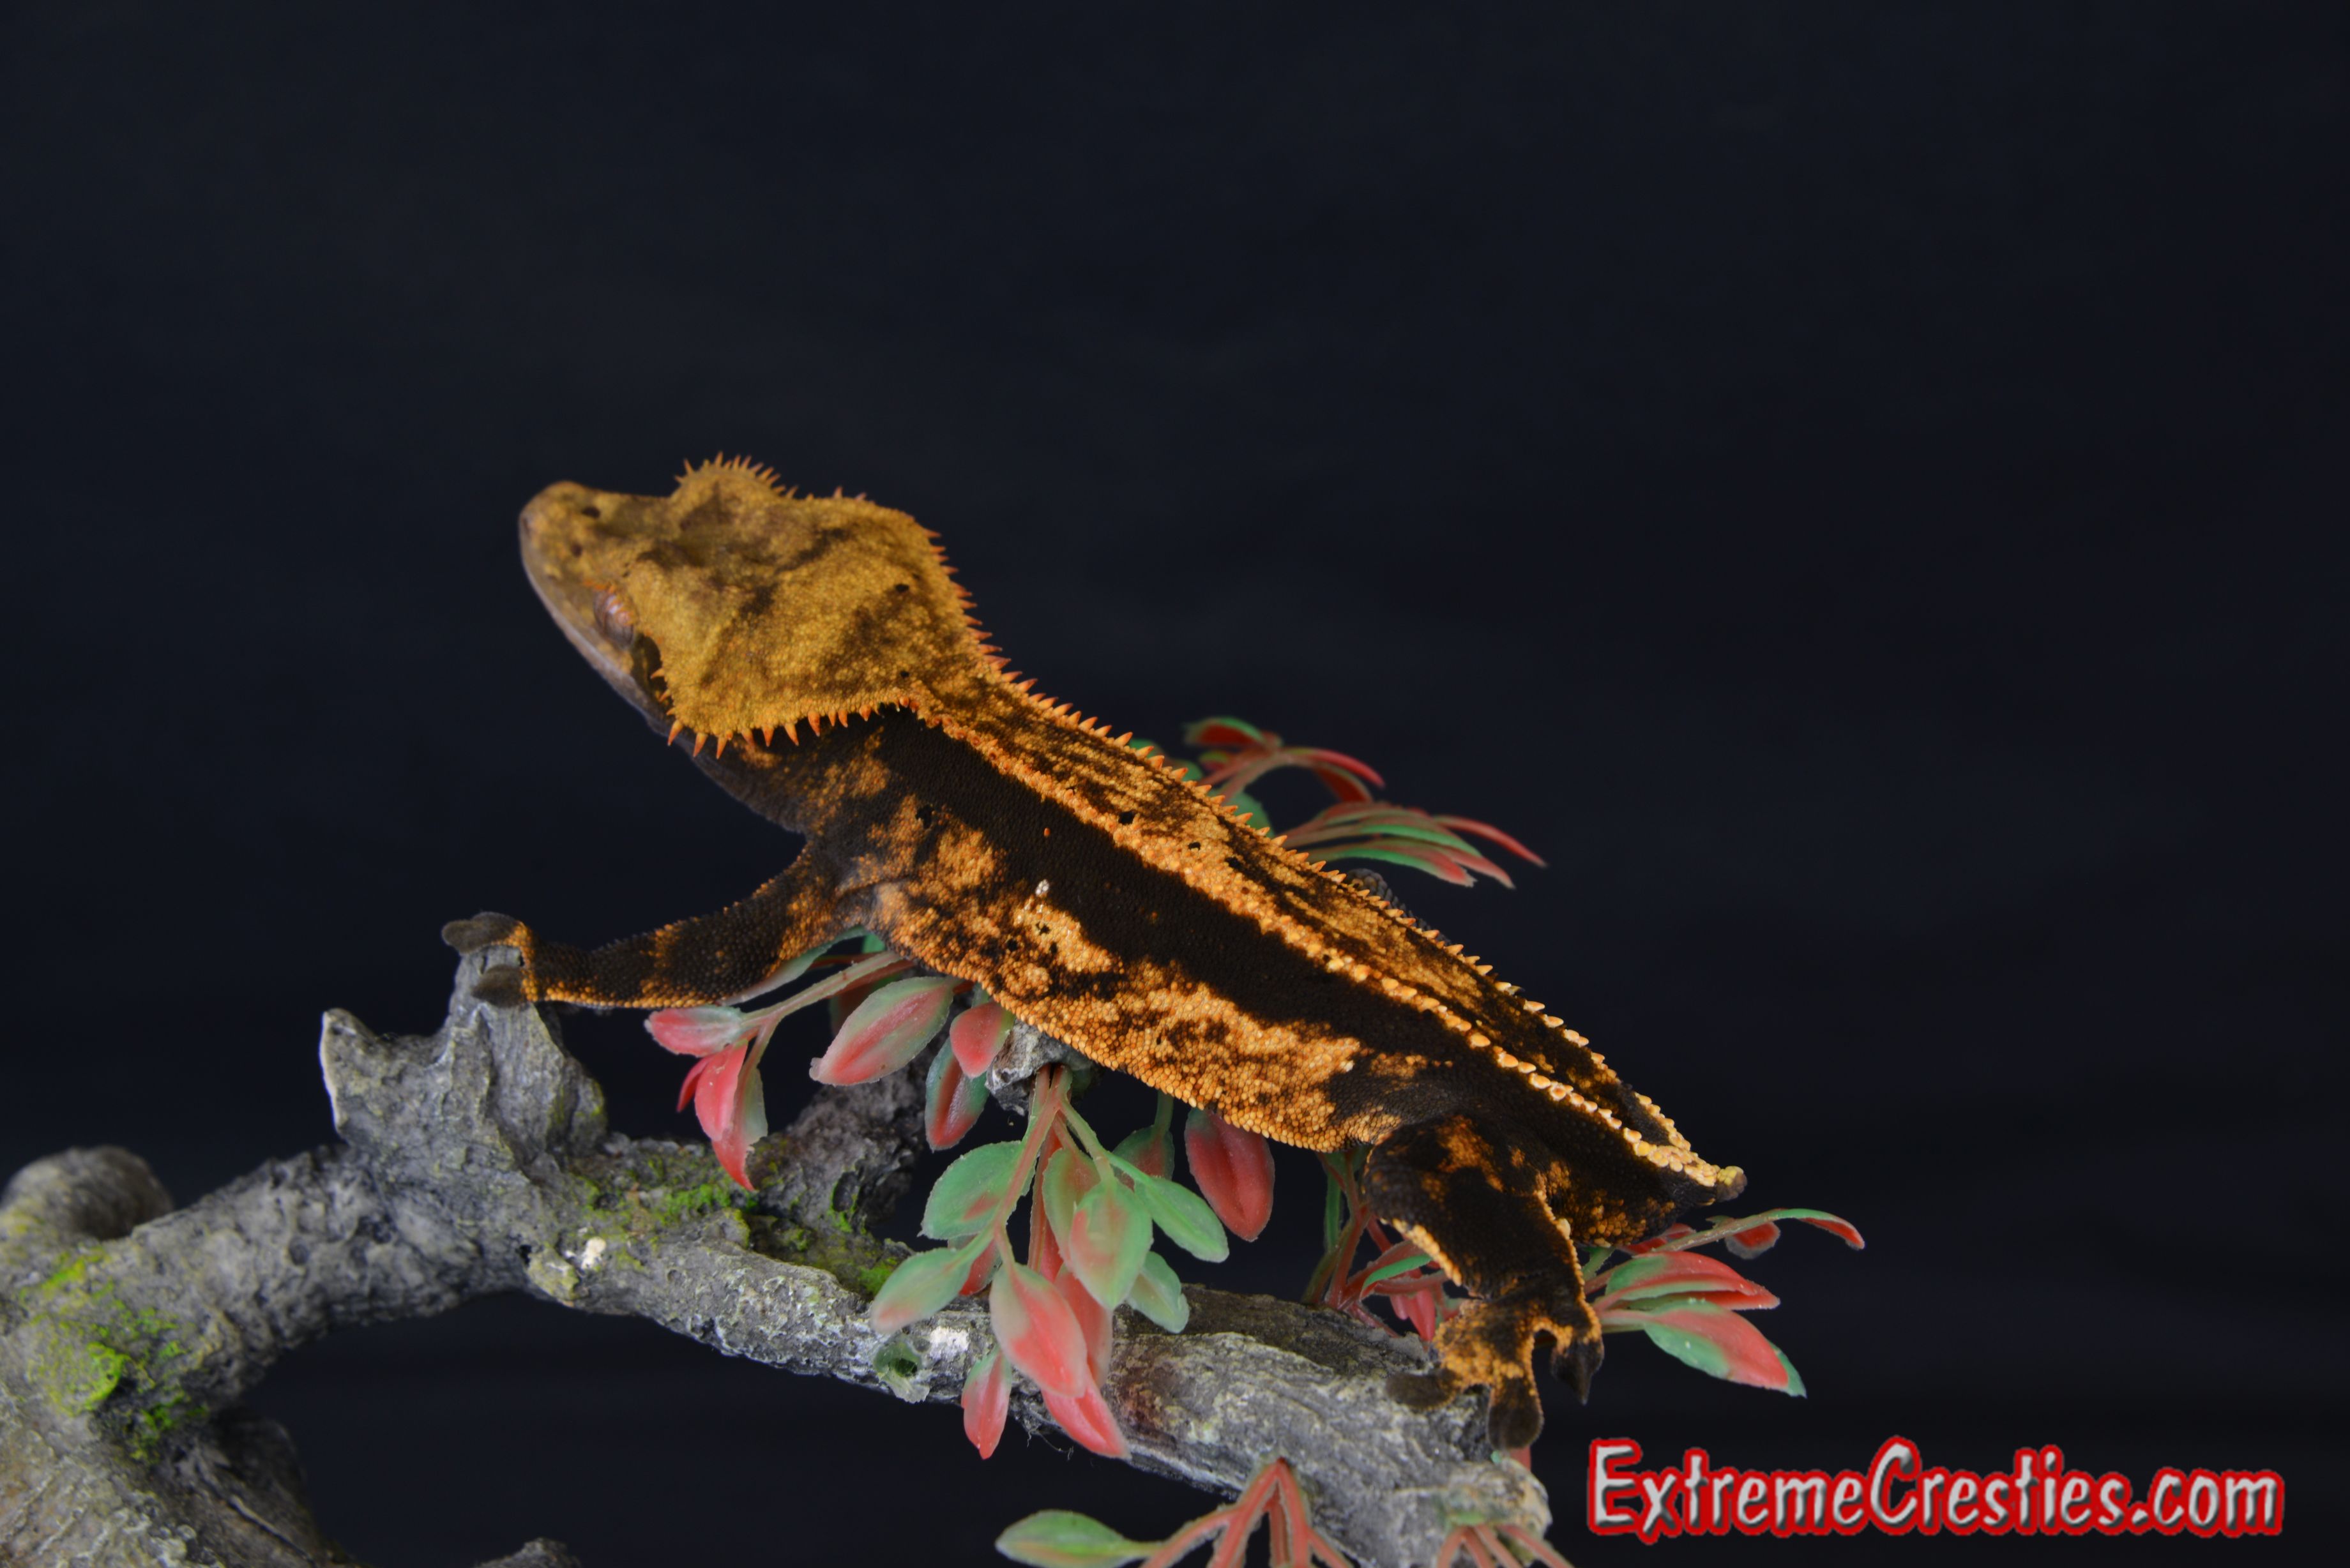 Black and Orange Crested Gecko